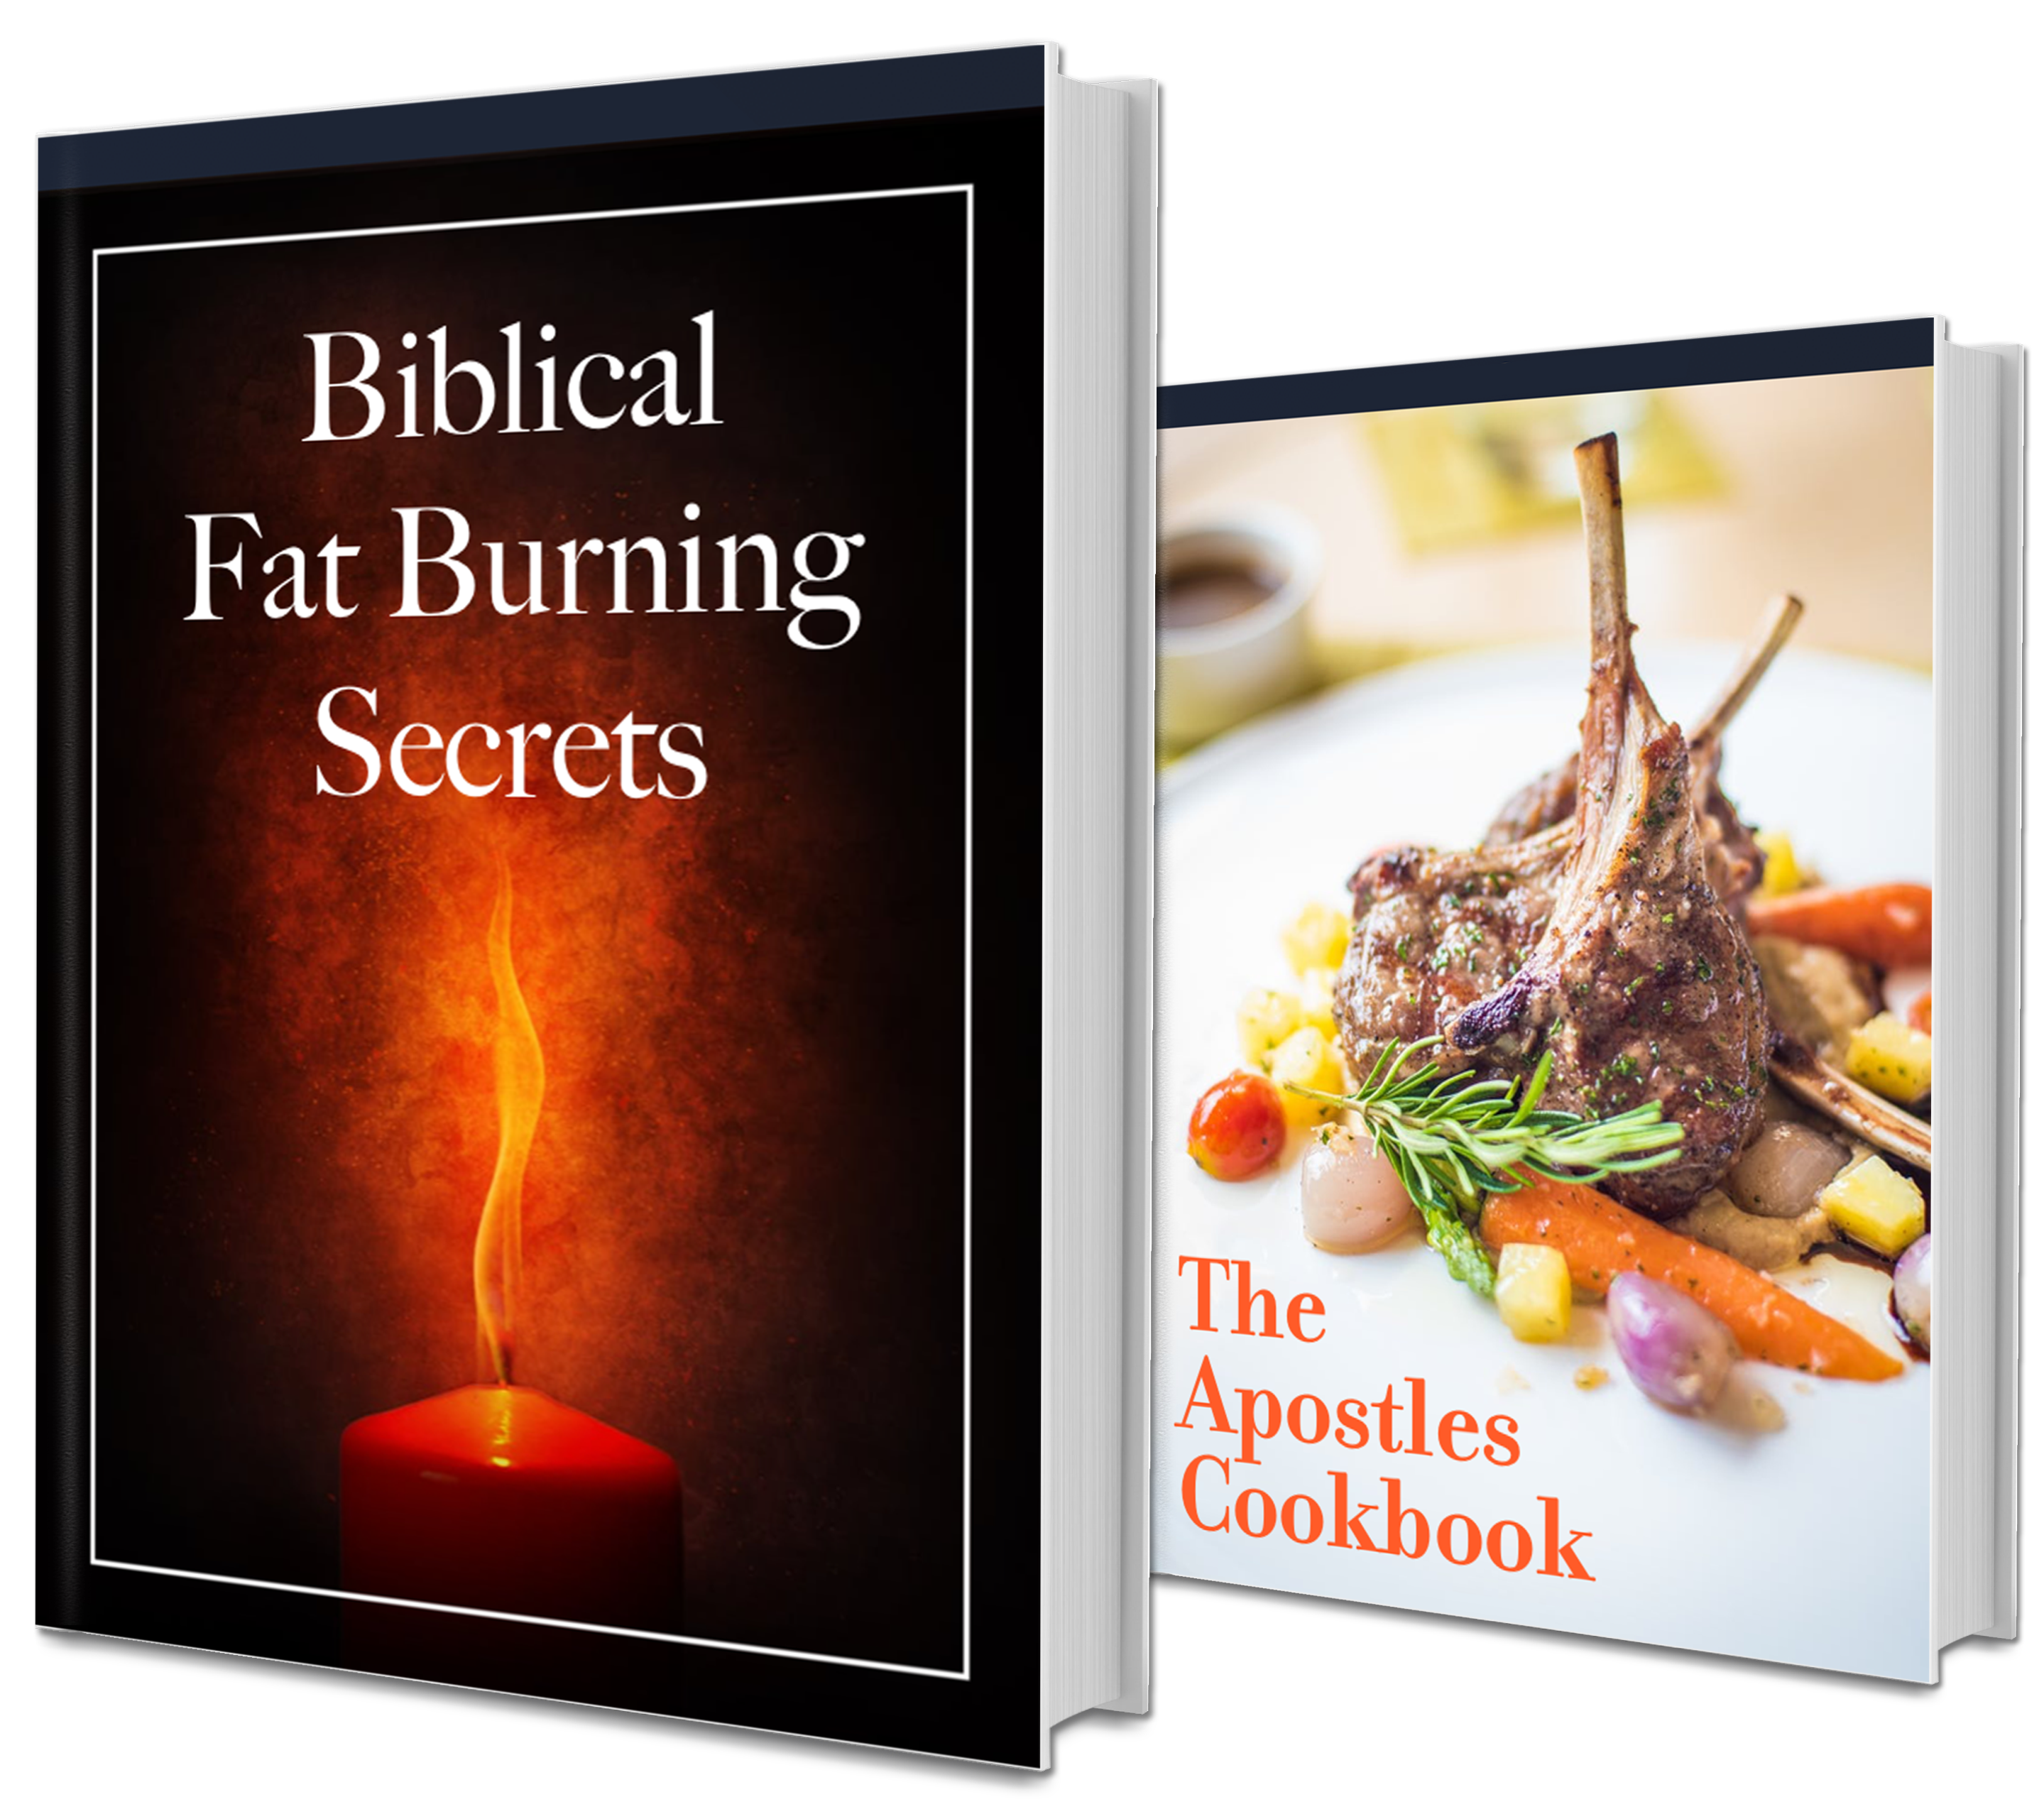  Biblical Fat Burning Secrets Special Offer